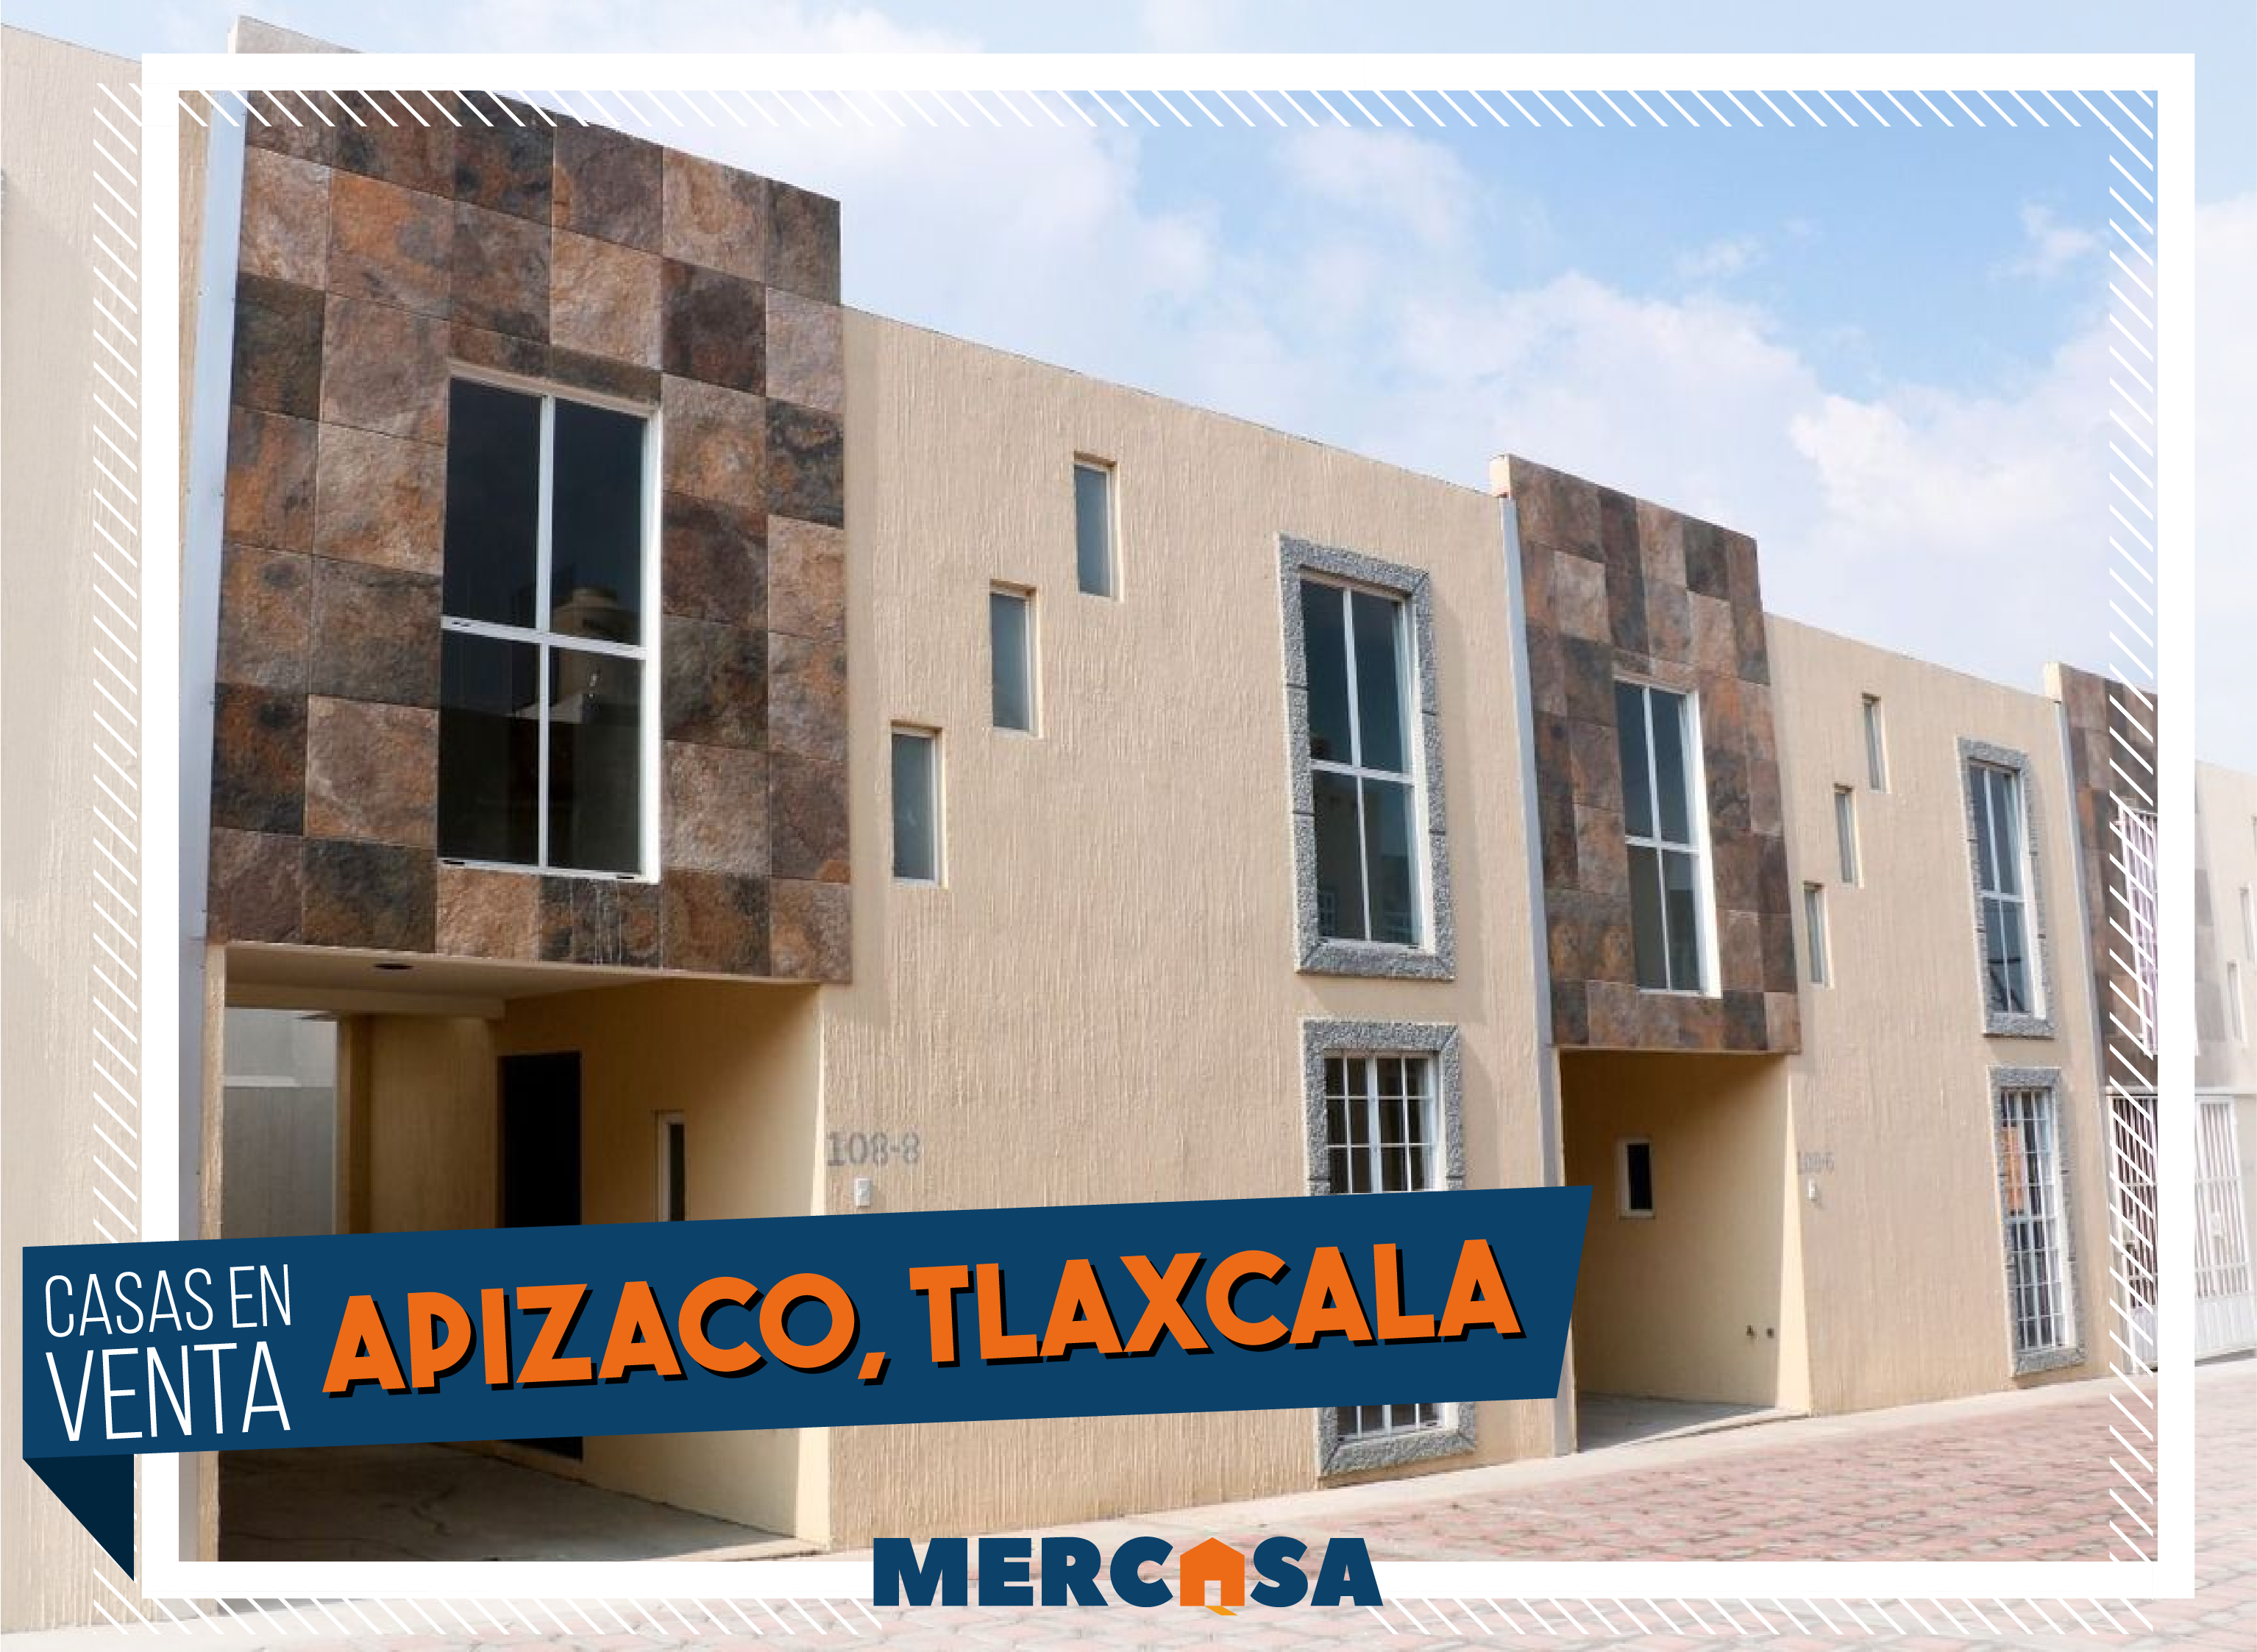 Casas en venta en Apizaco - Mercasa